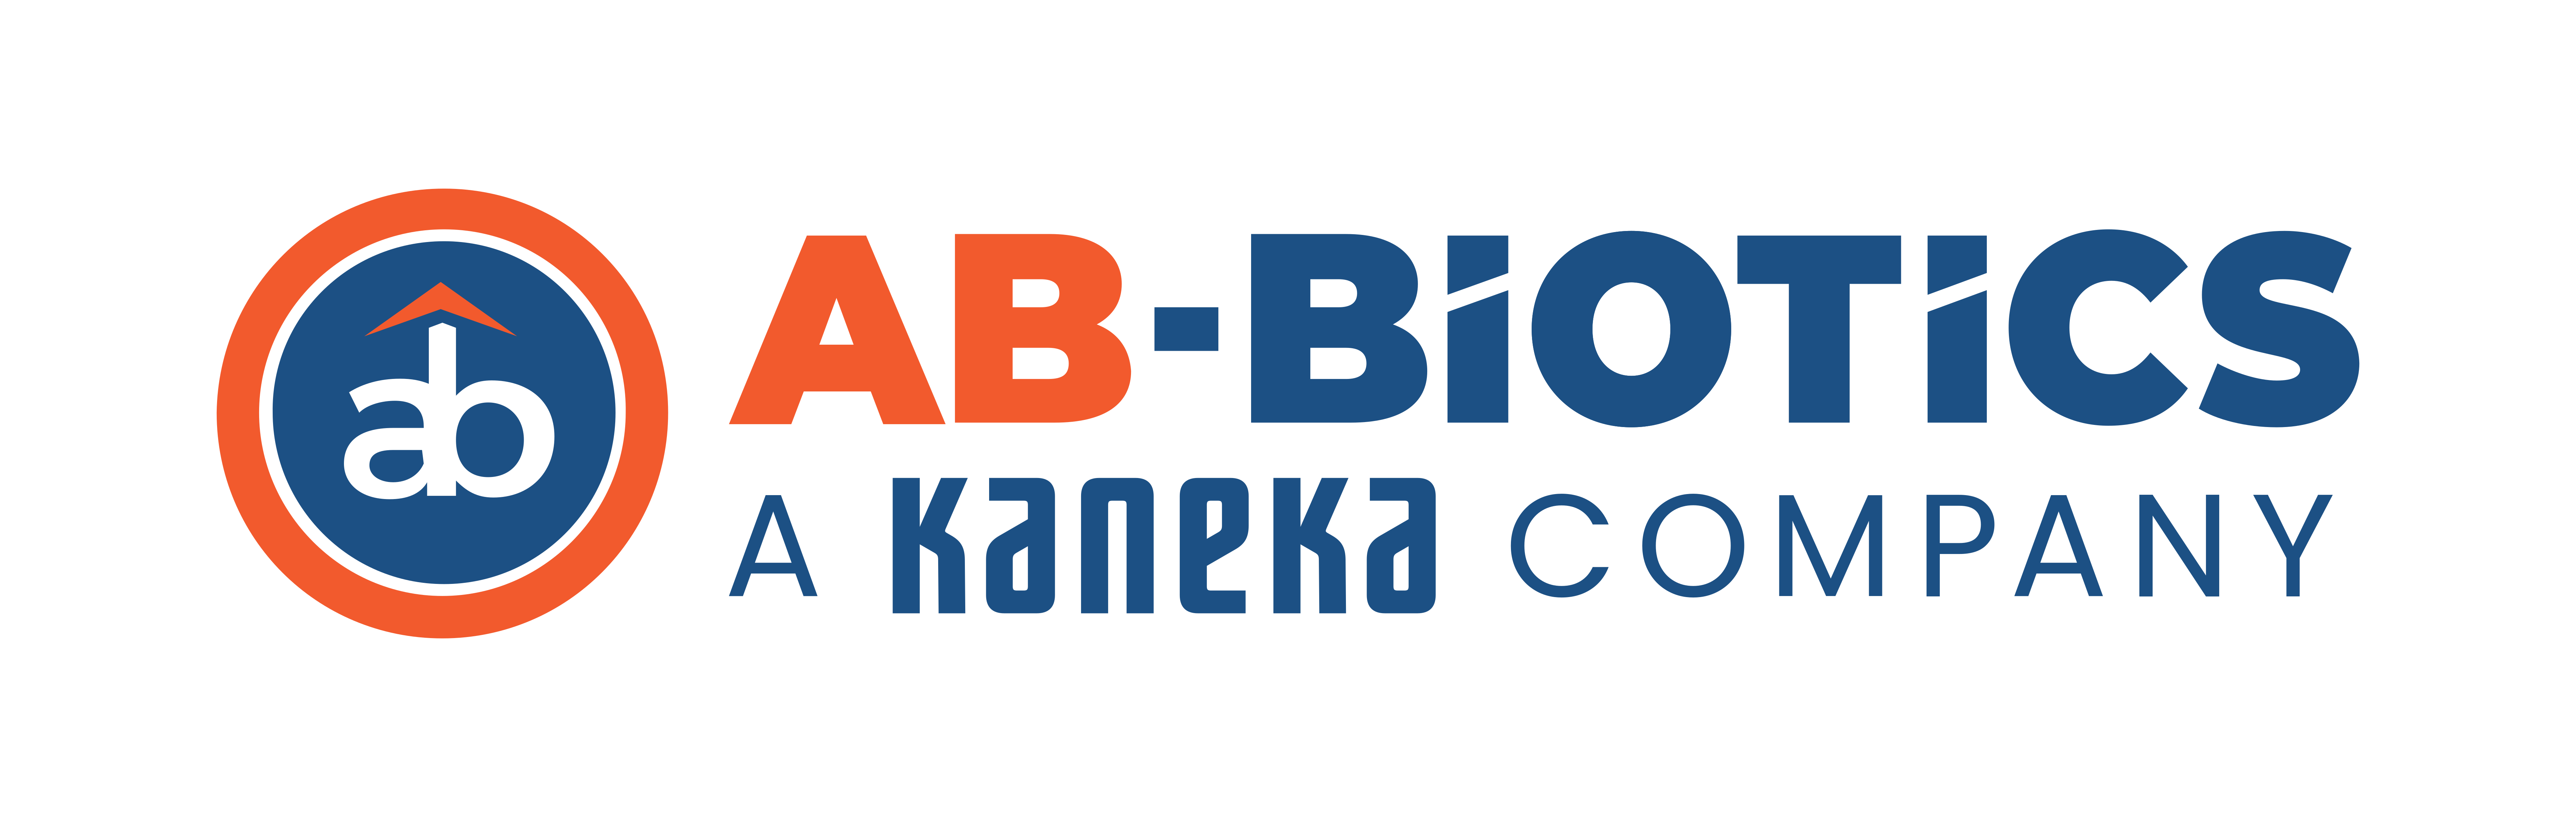 Ab Biotics S.A